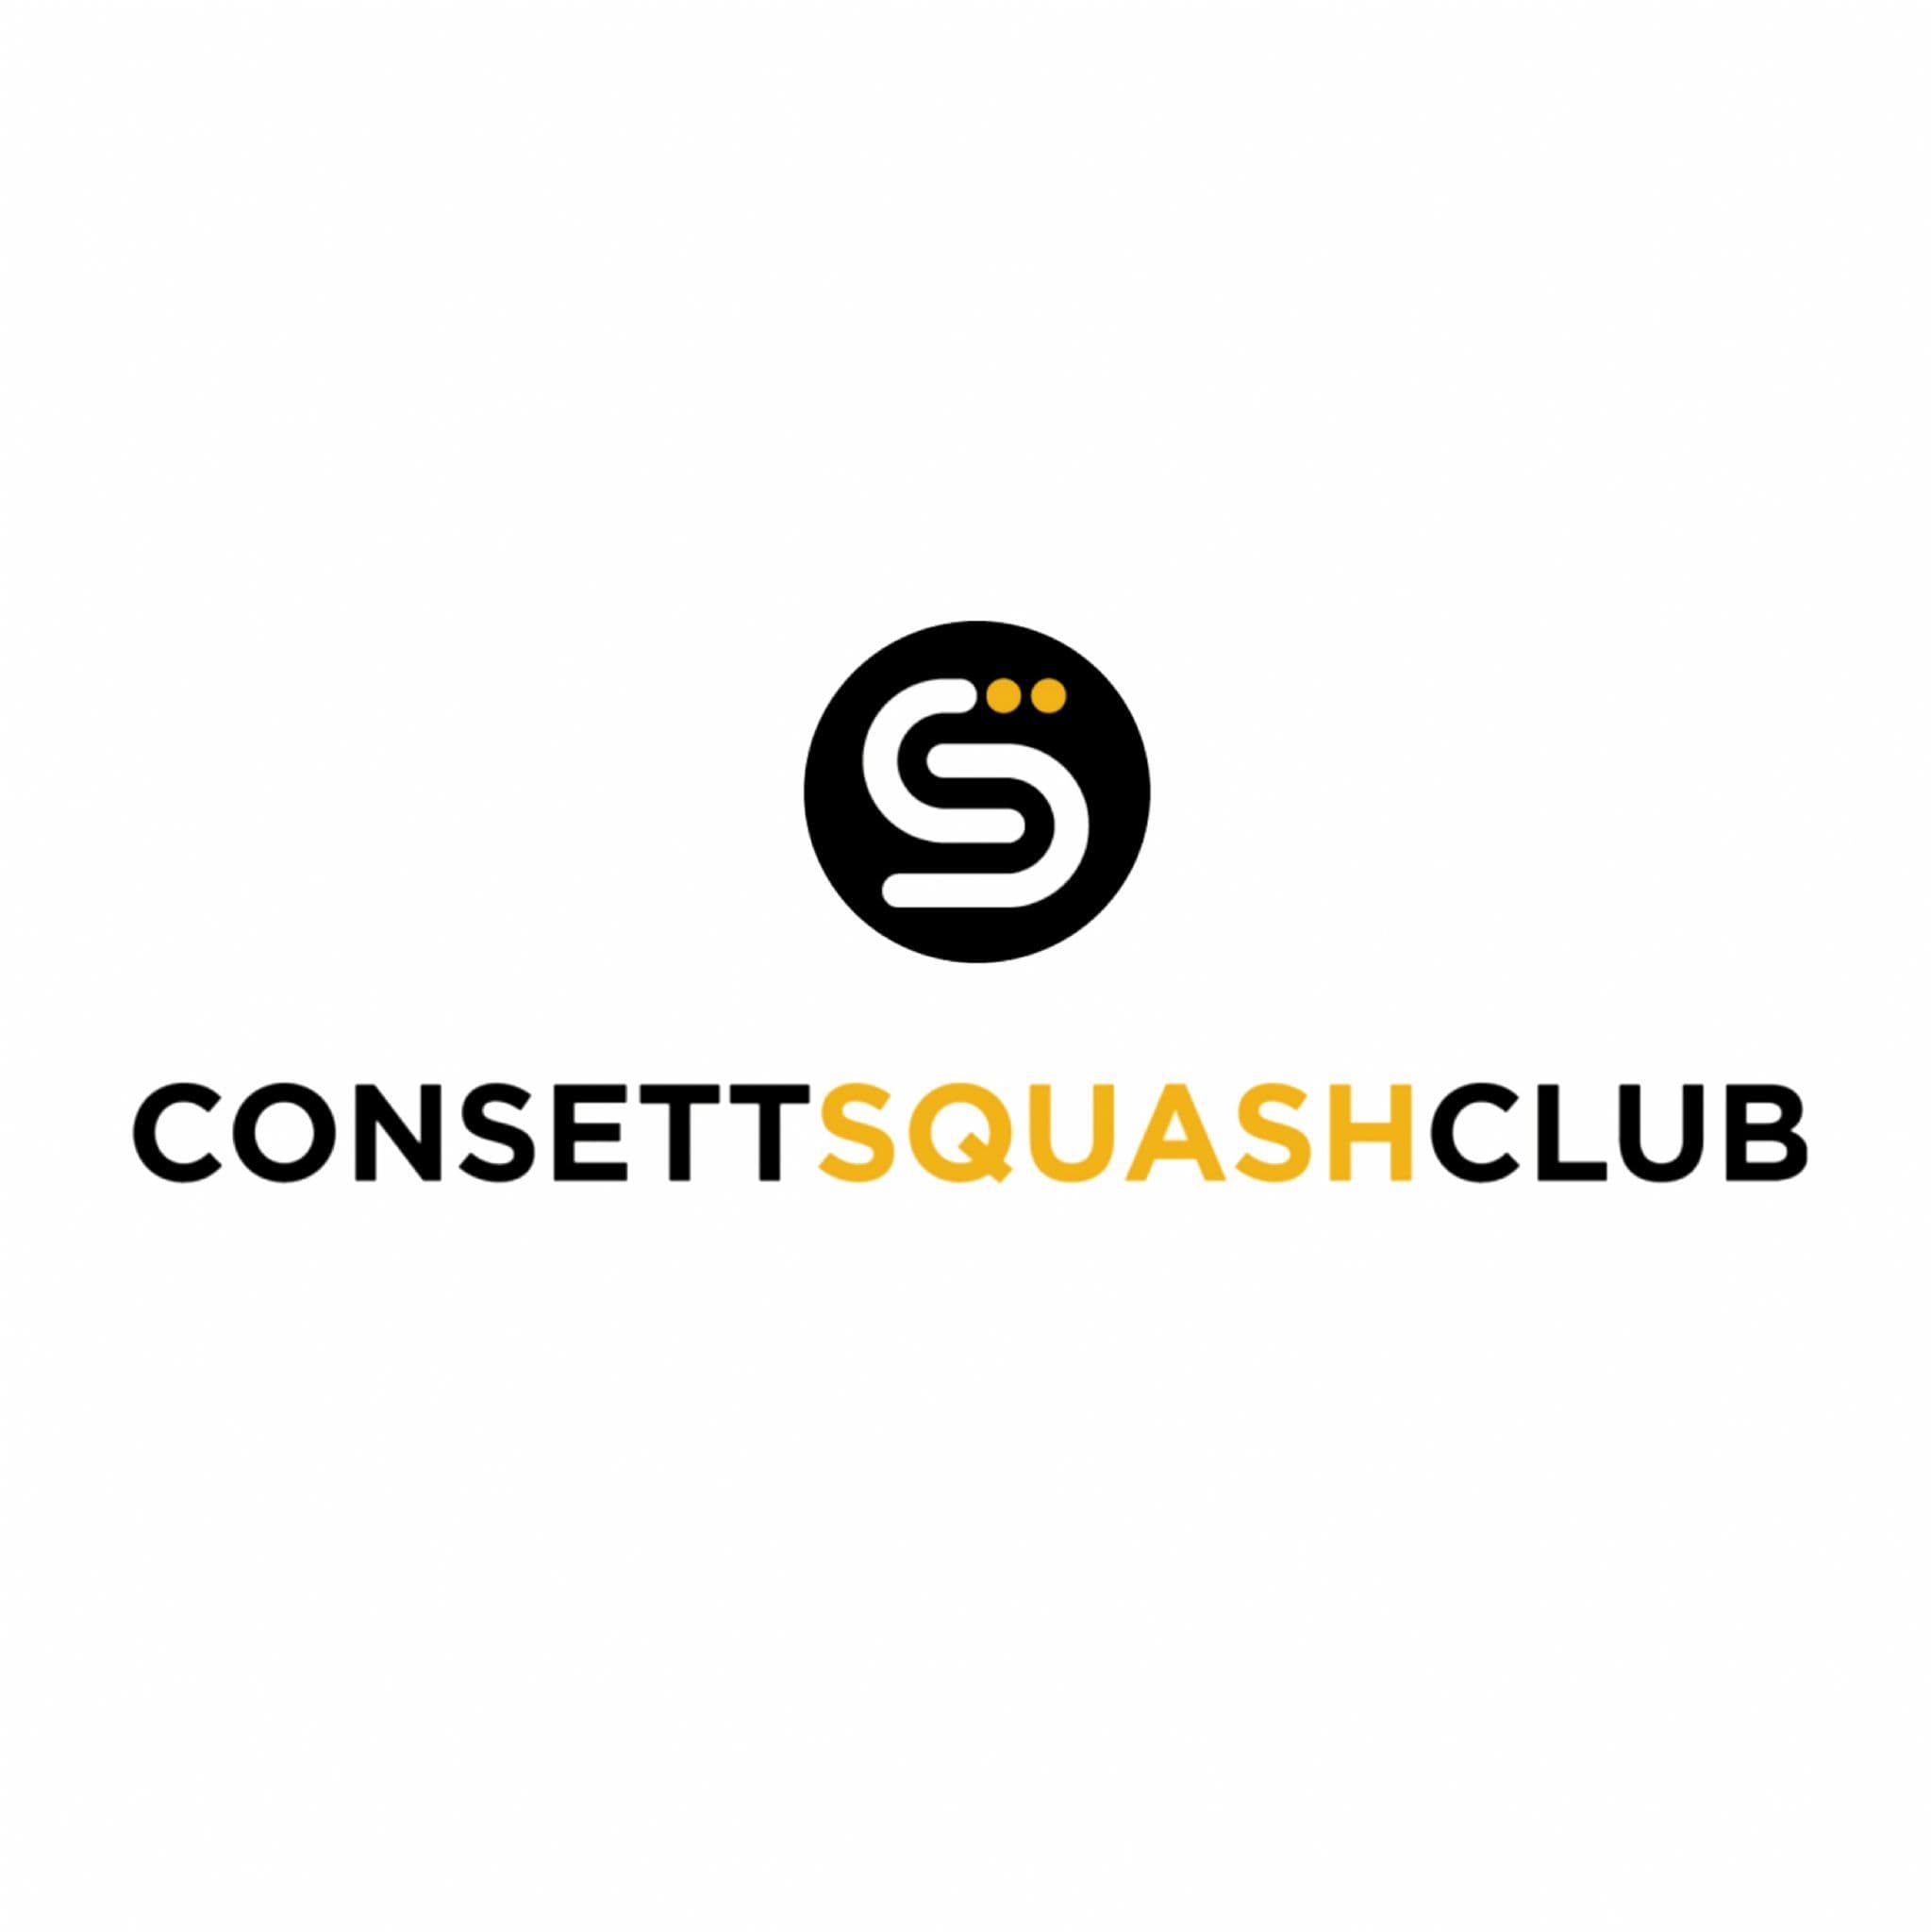 Consett Squash Club